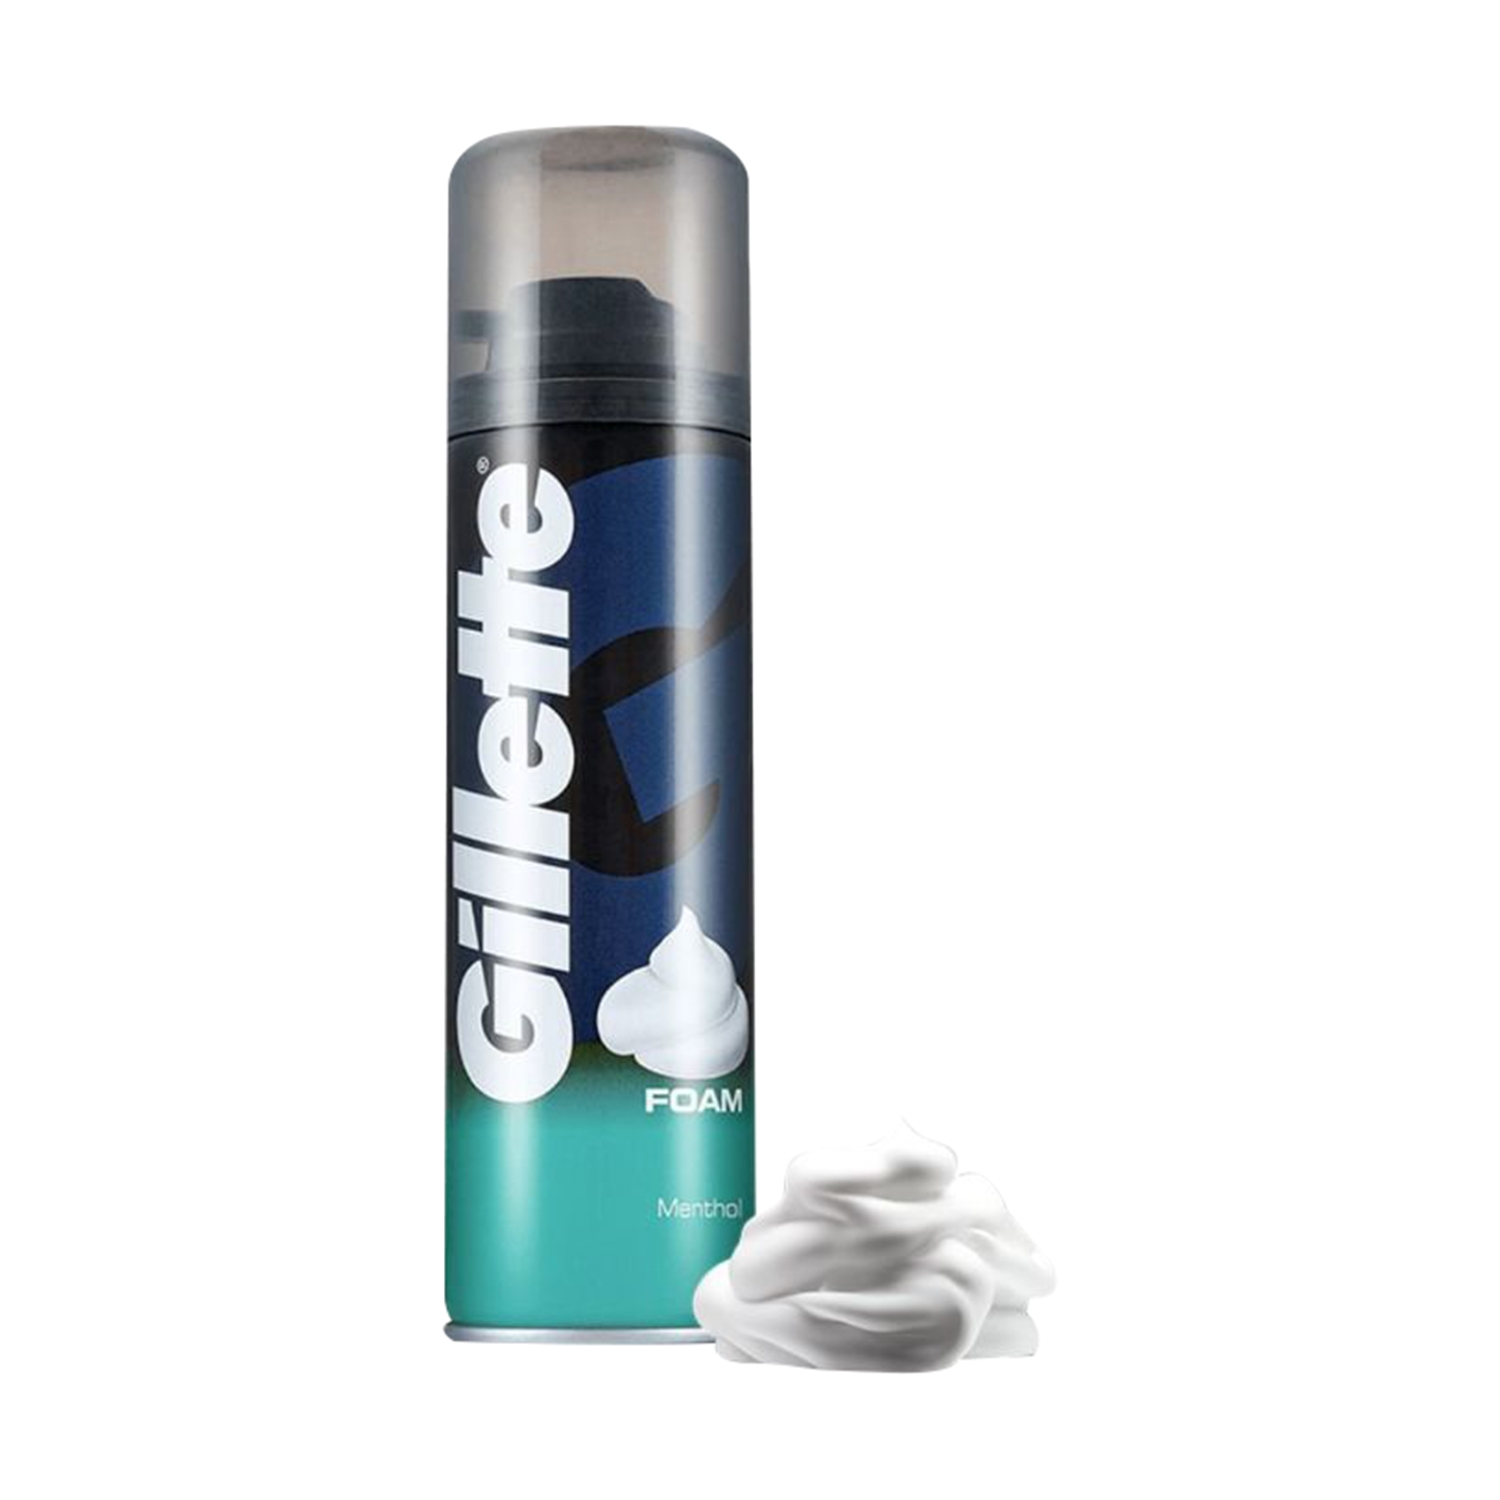 Gillette | Gillette Classic Menthol Pre Shave Foam (196g)